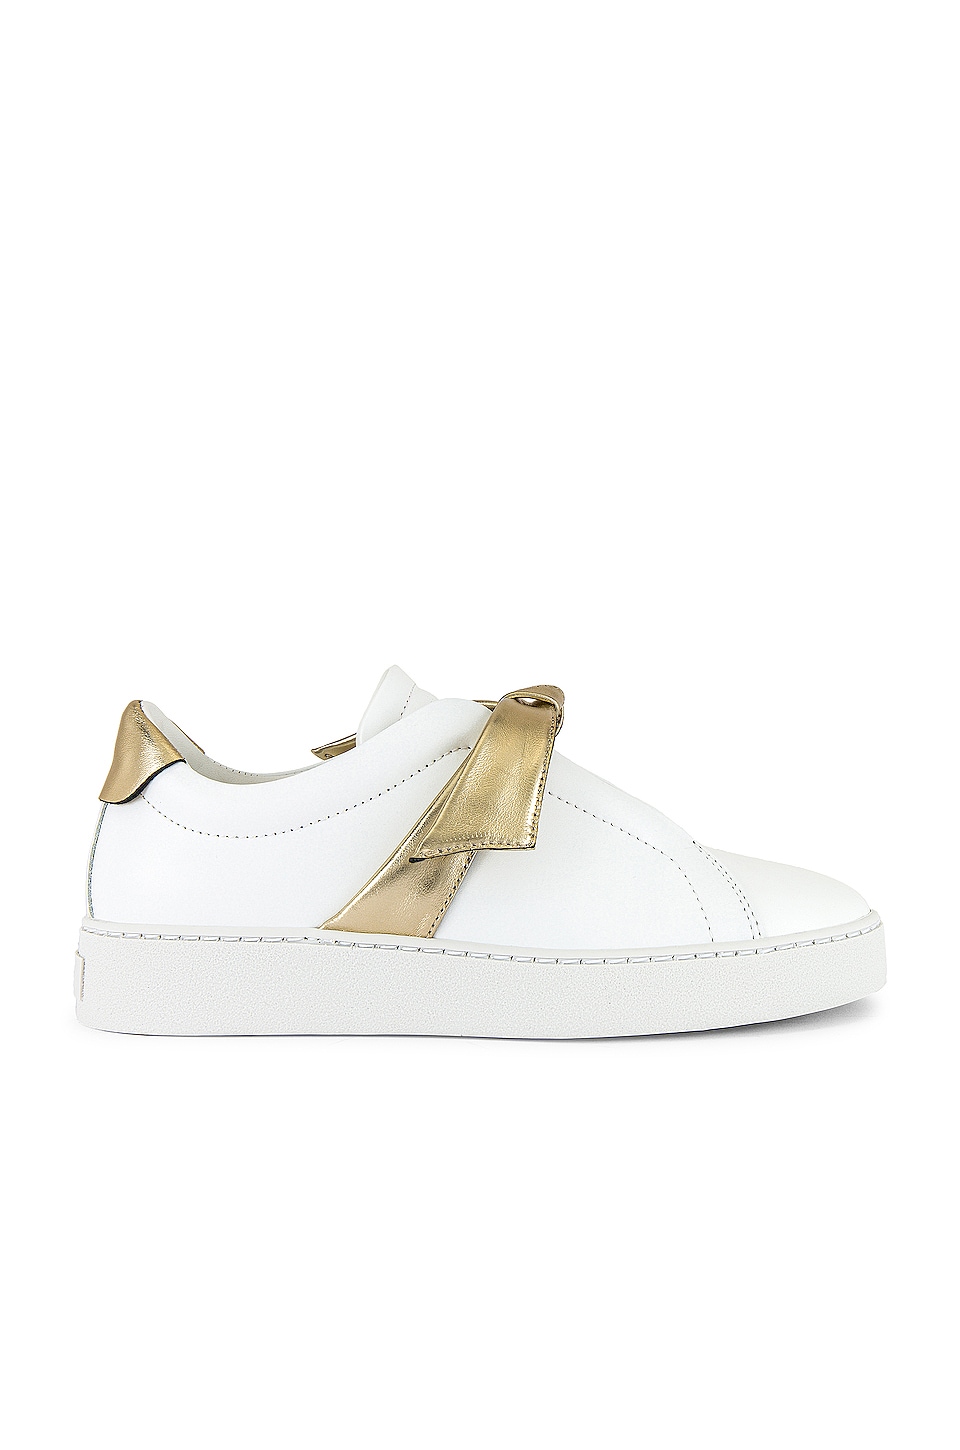 Alexandre Birman Clarita Sneaker in White & Light Gold | REVOLVE